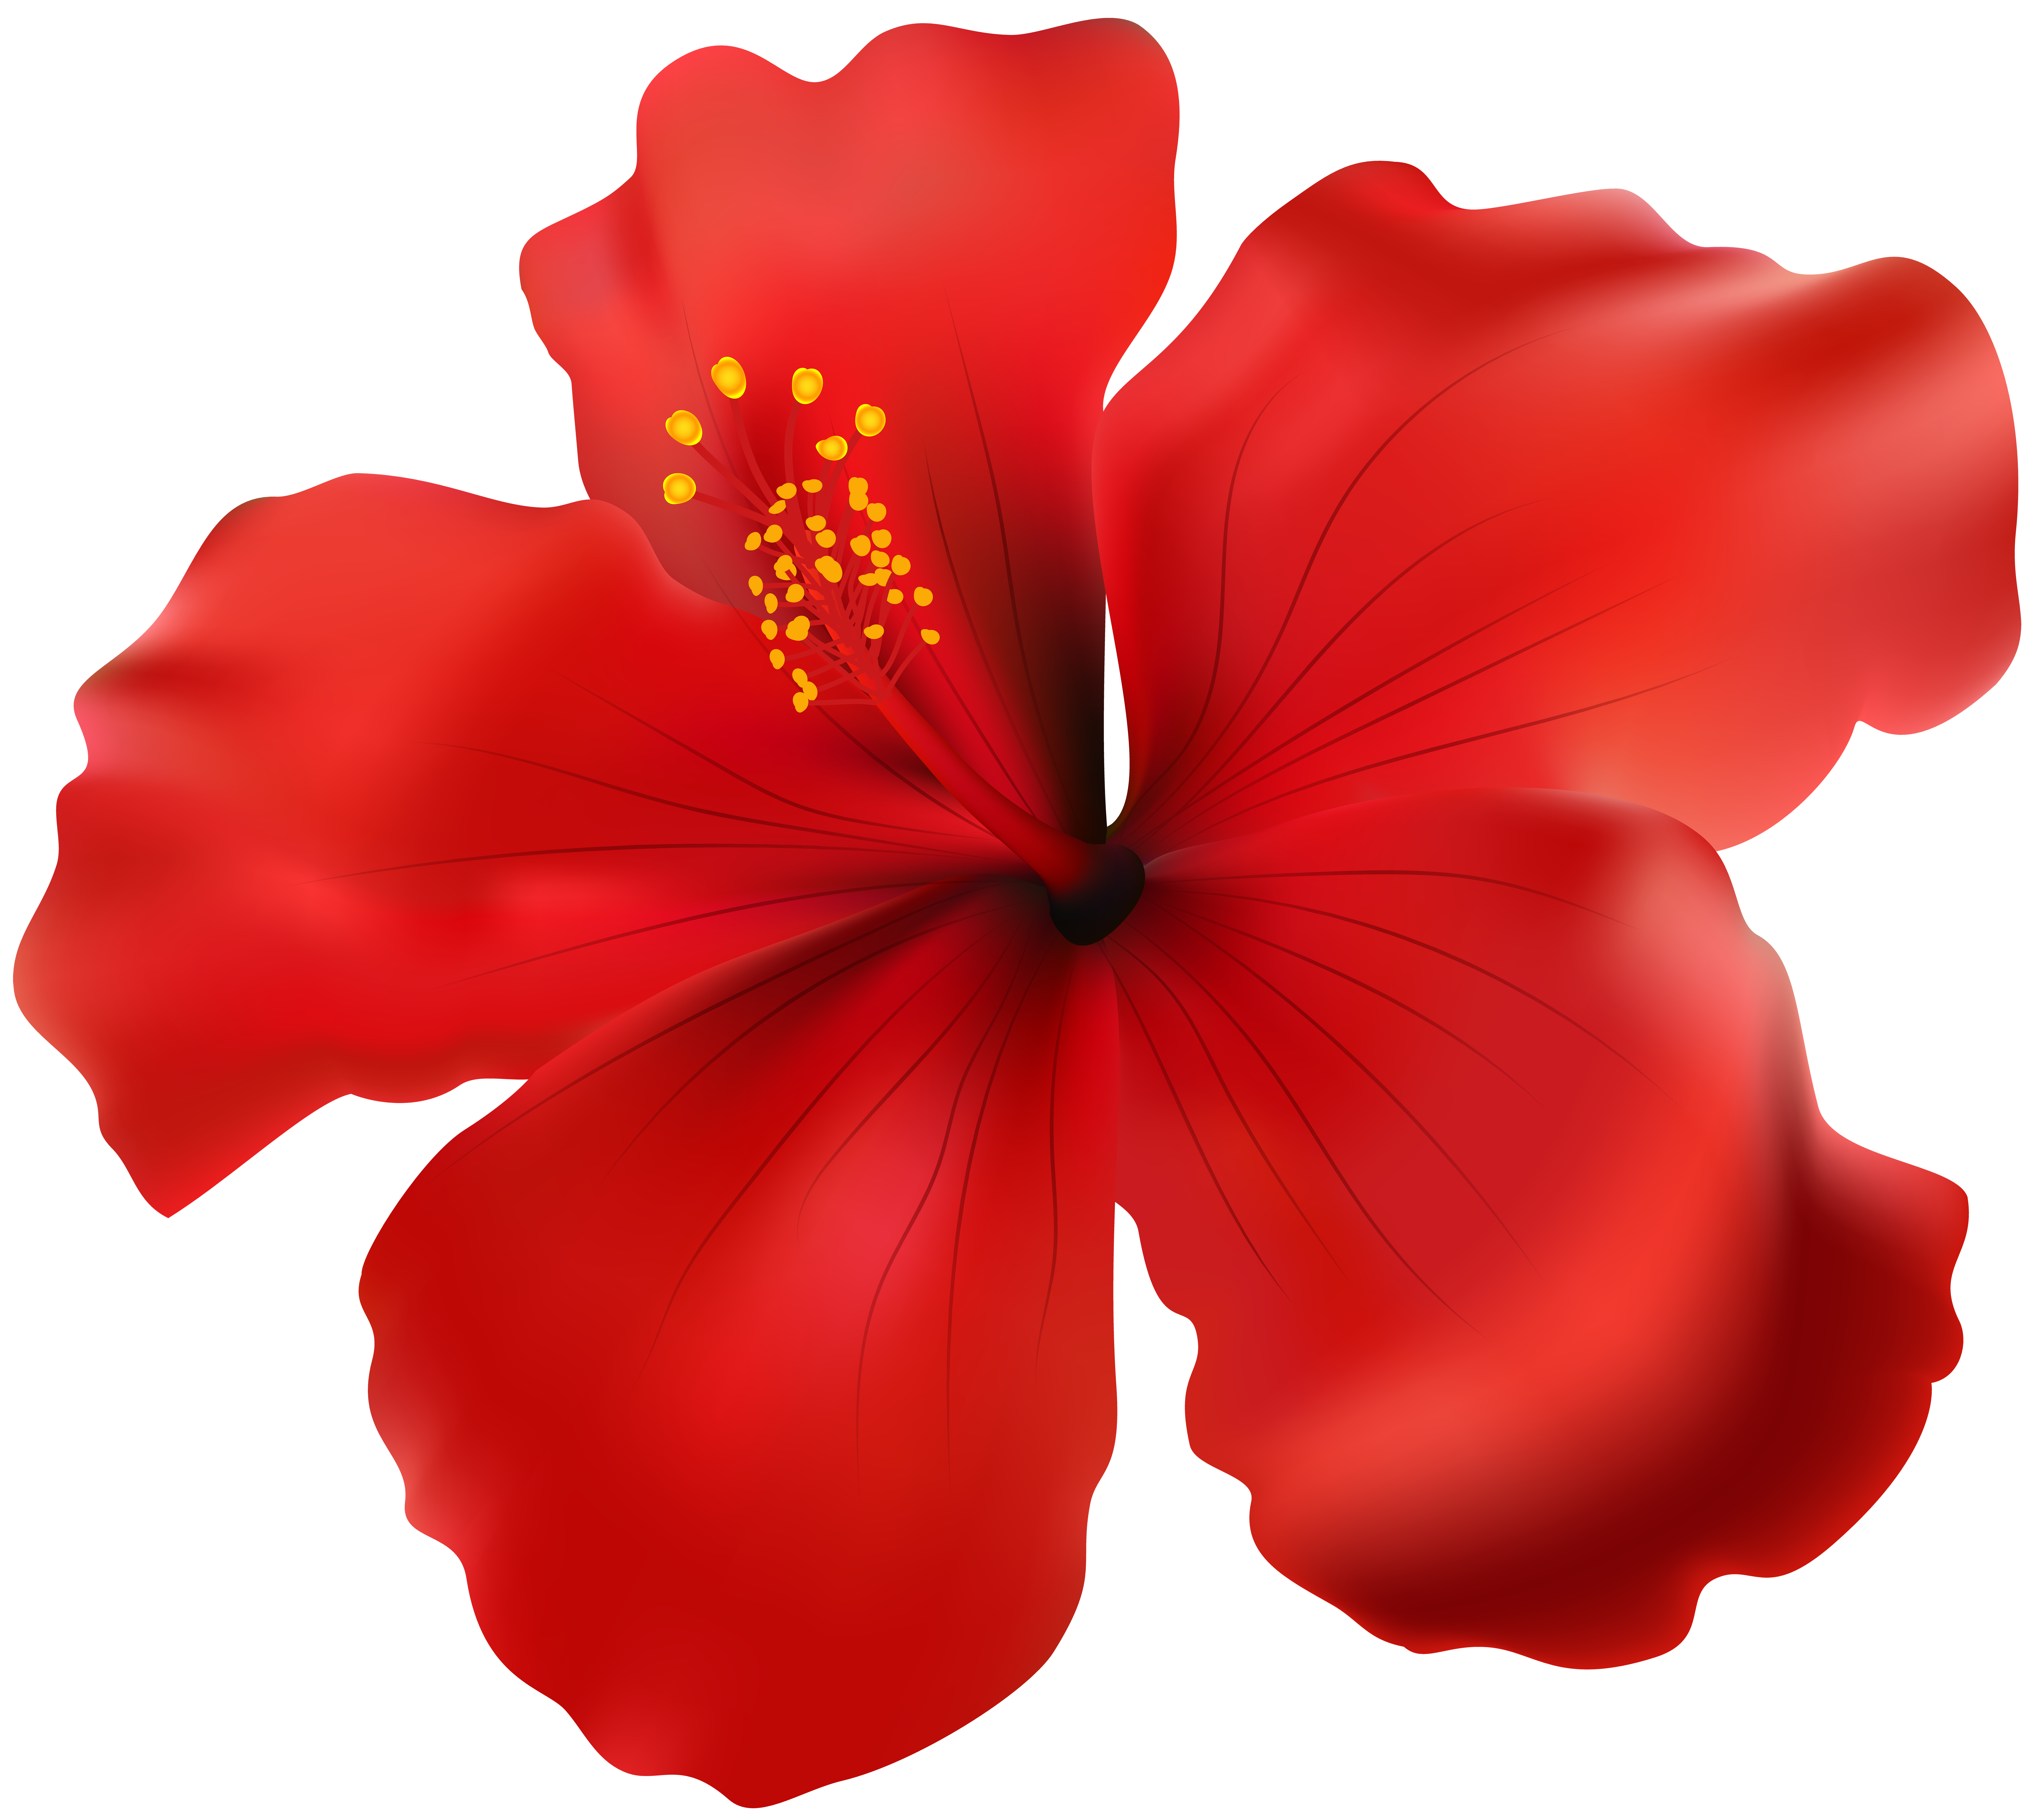 Hibiscus Red Transparent PNG Clip Art Image